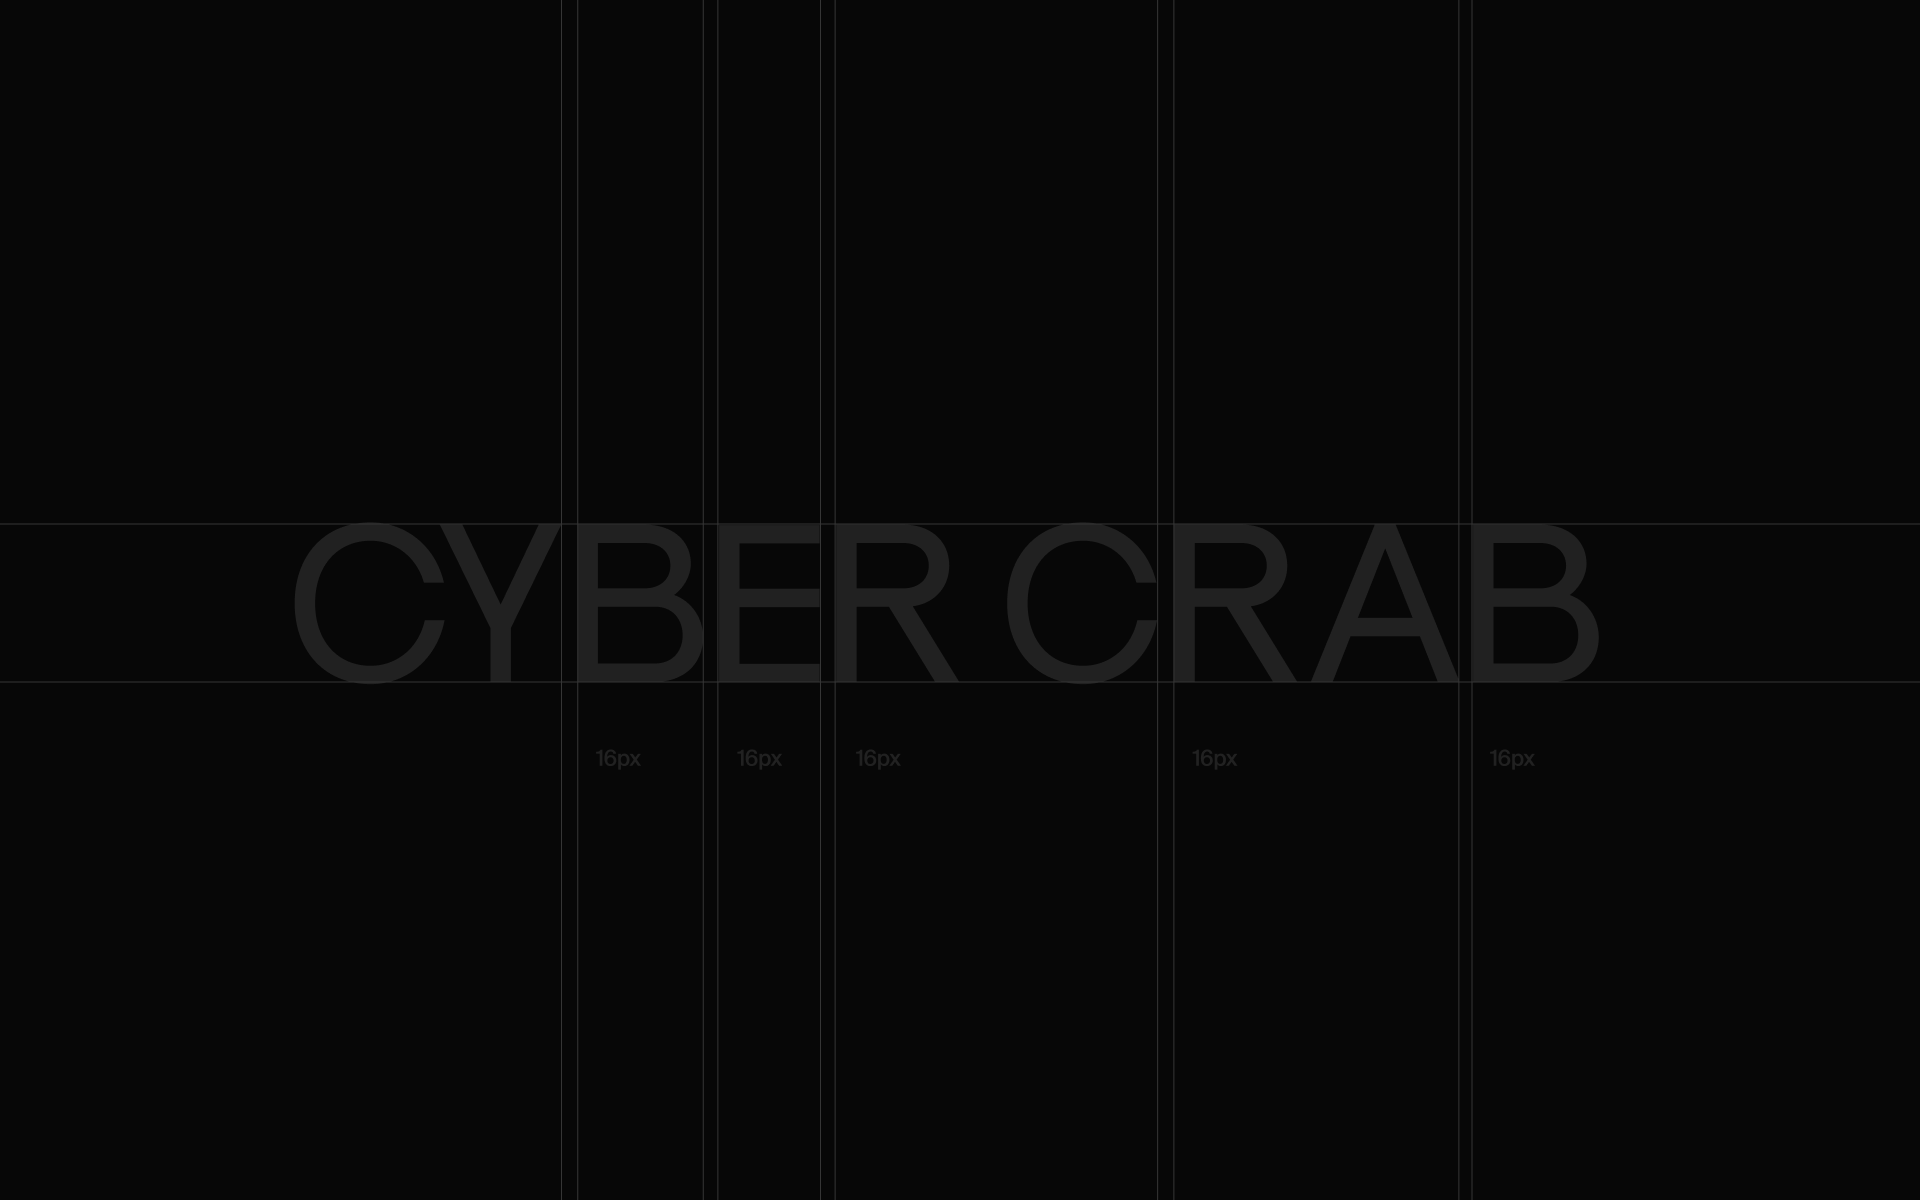 CYBER_CRAB — Изображение №3 — Интерфейсы, Брендинг на Dprofile